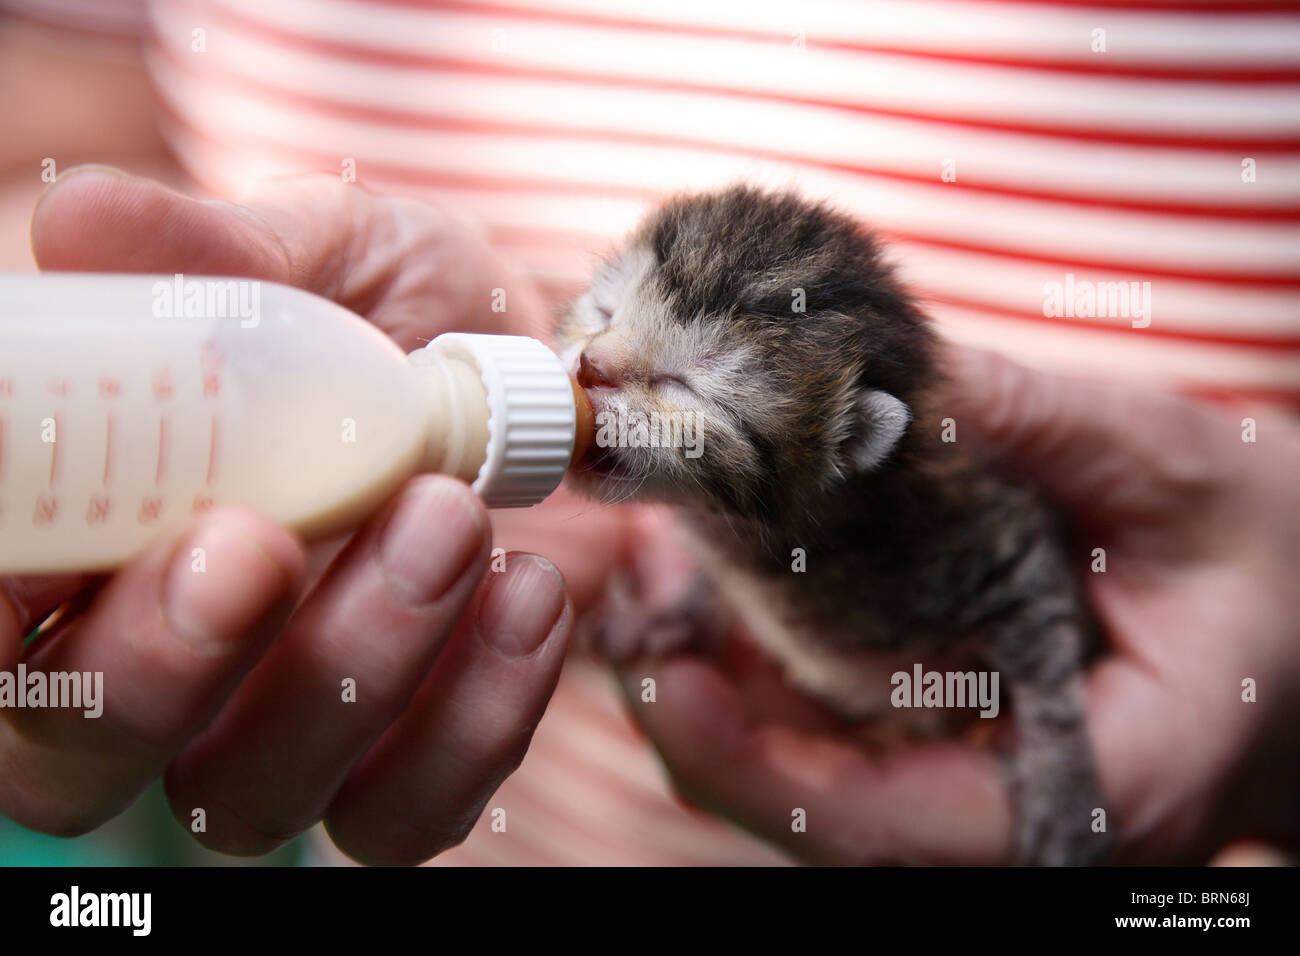 Feeding a newborn cat with a bottle Stock Photo